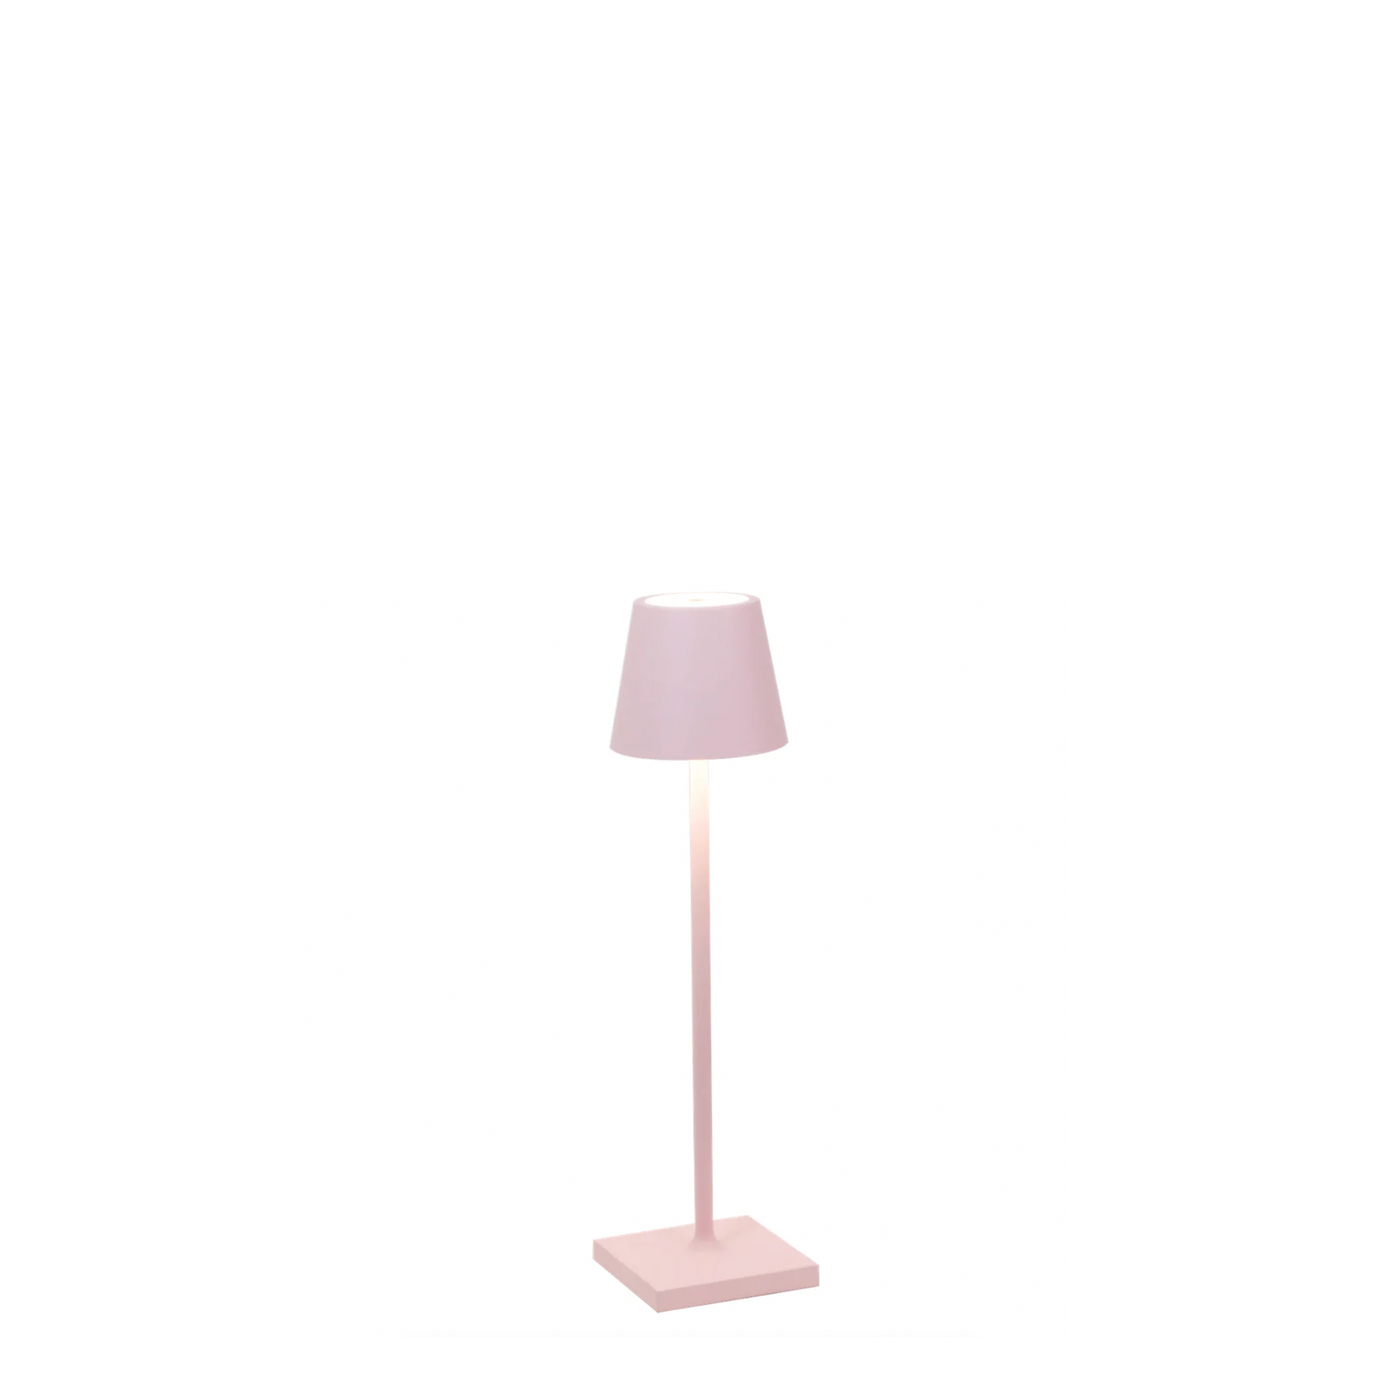 Poldina Pro Micro Cordless Table Lamp | Newport Lamp And Shade | Located in Newport, RI